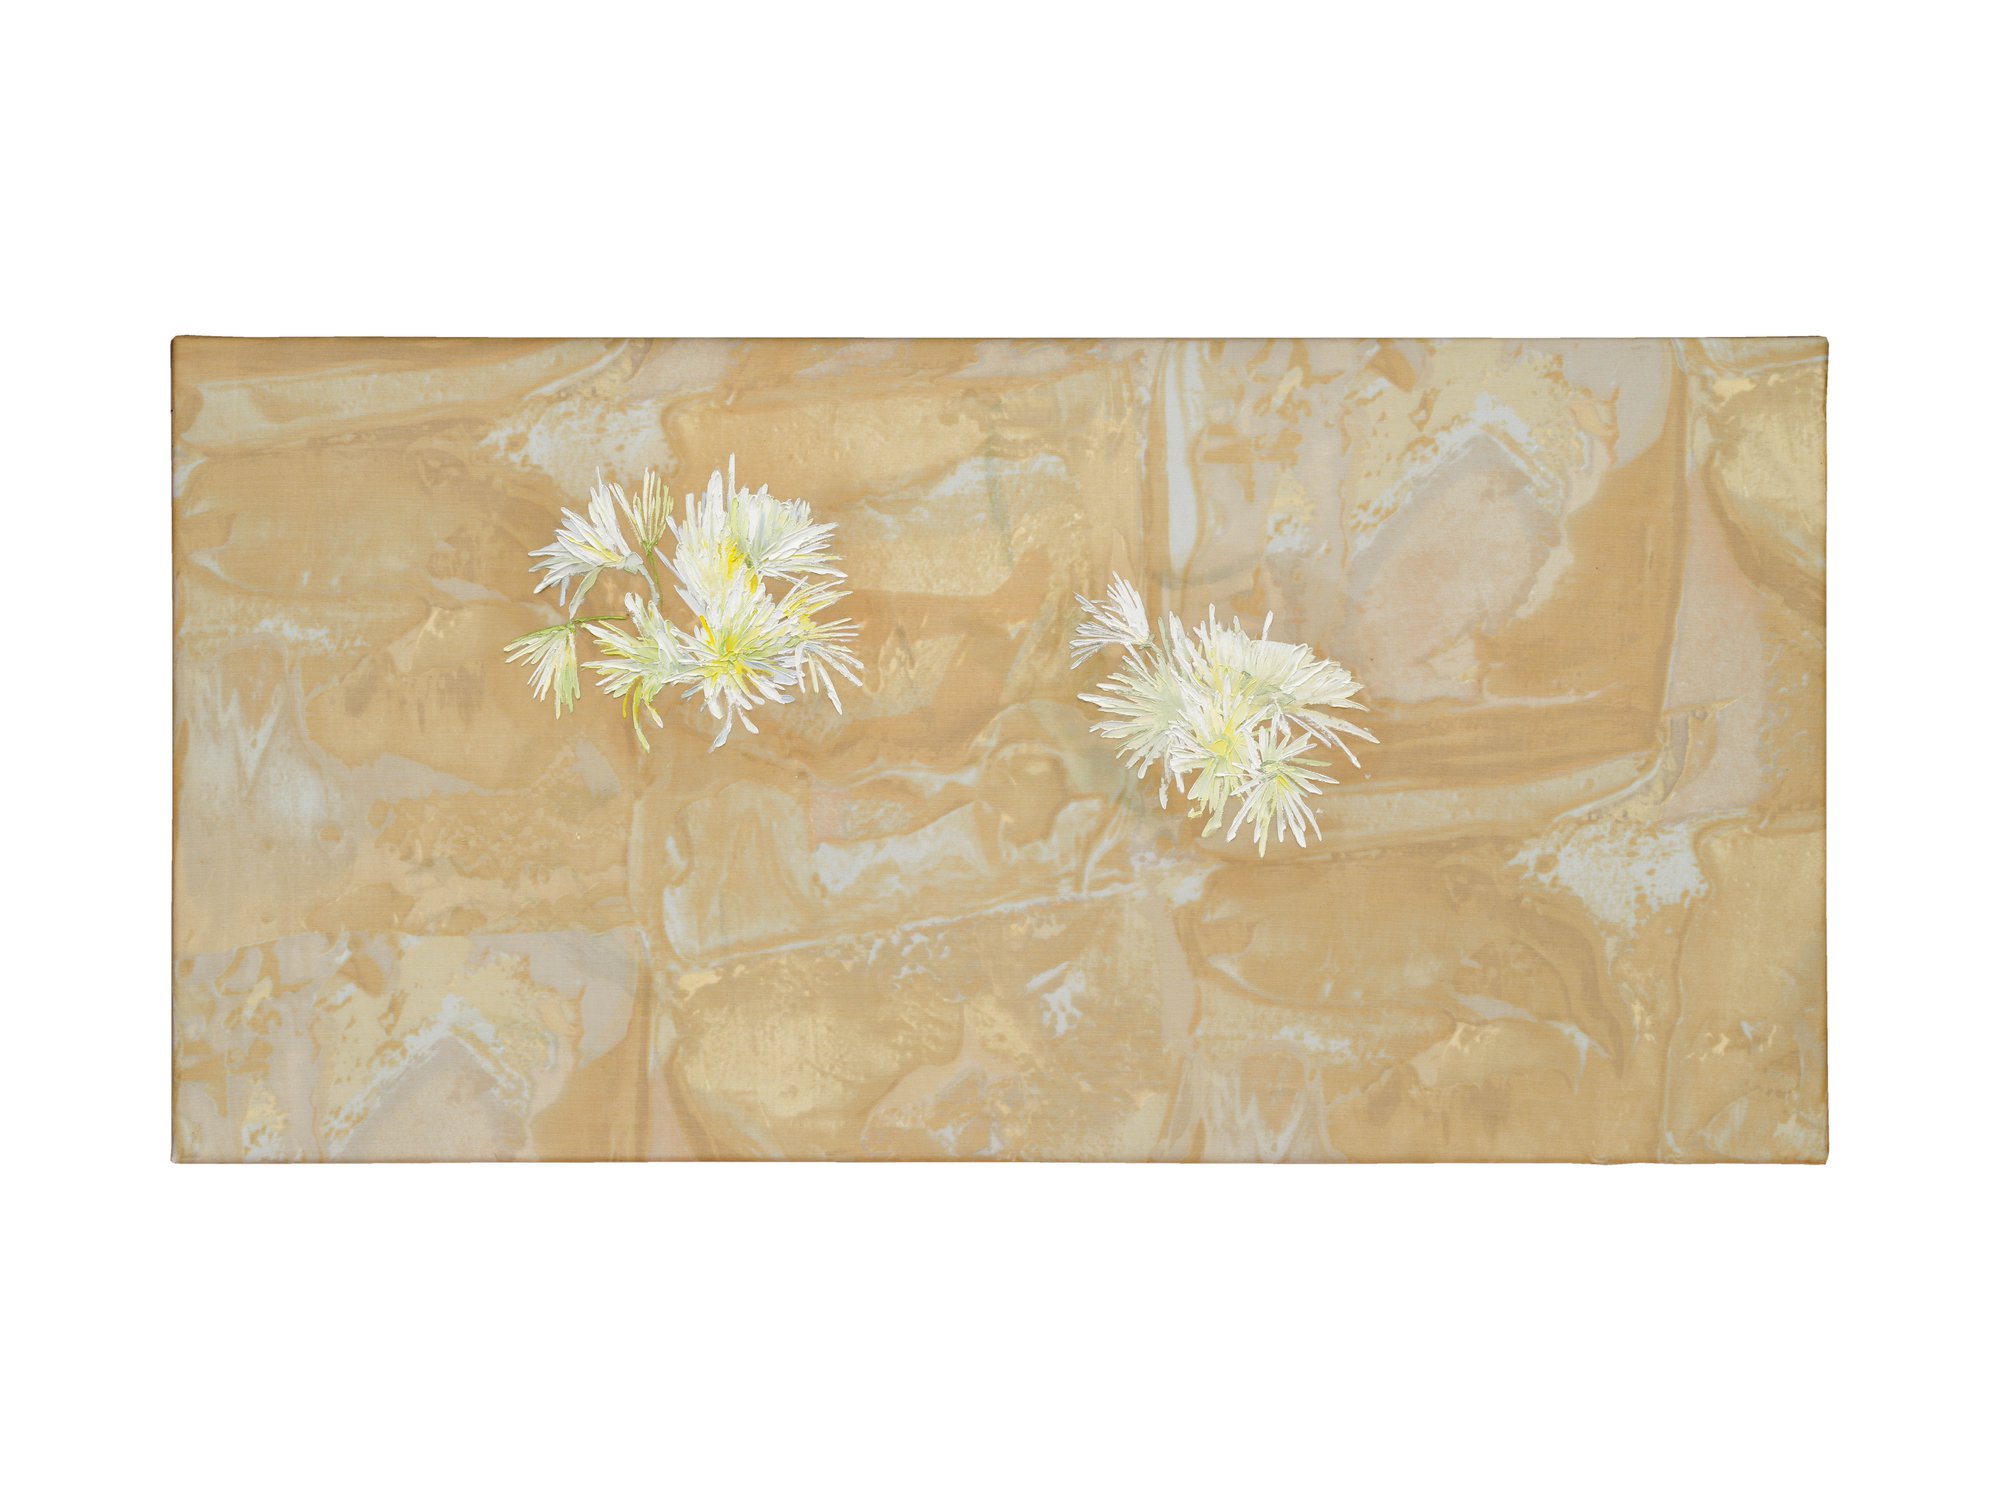 Bernat Klein, Chrysanthemums (spider), oil on screen printed knitted jersey polyester (Diolen), 55.5 x 106 cm, 1998